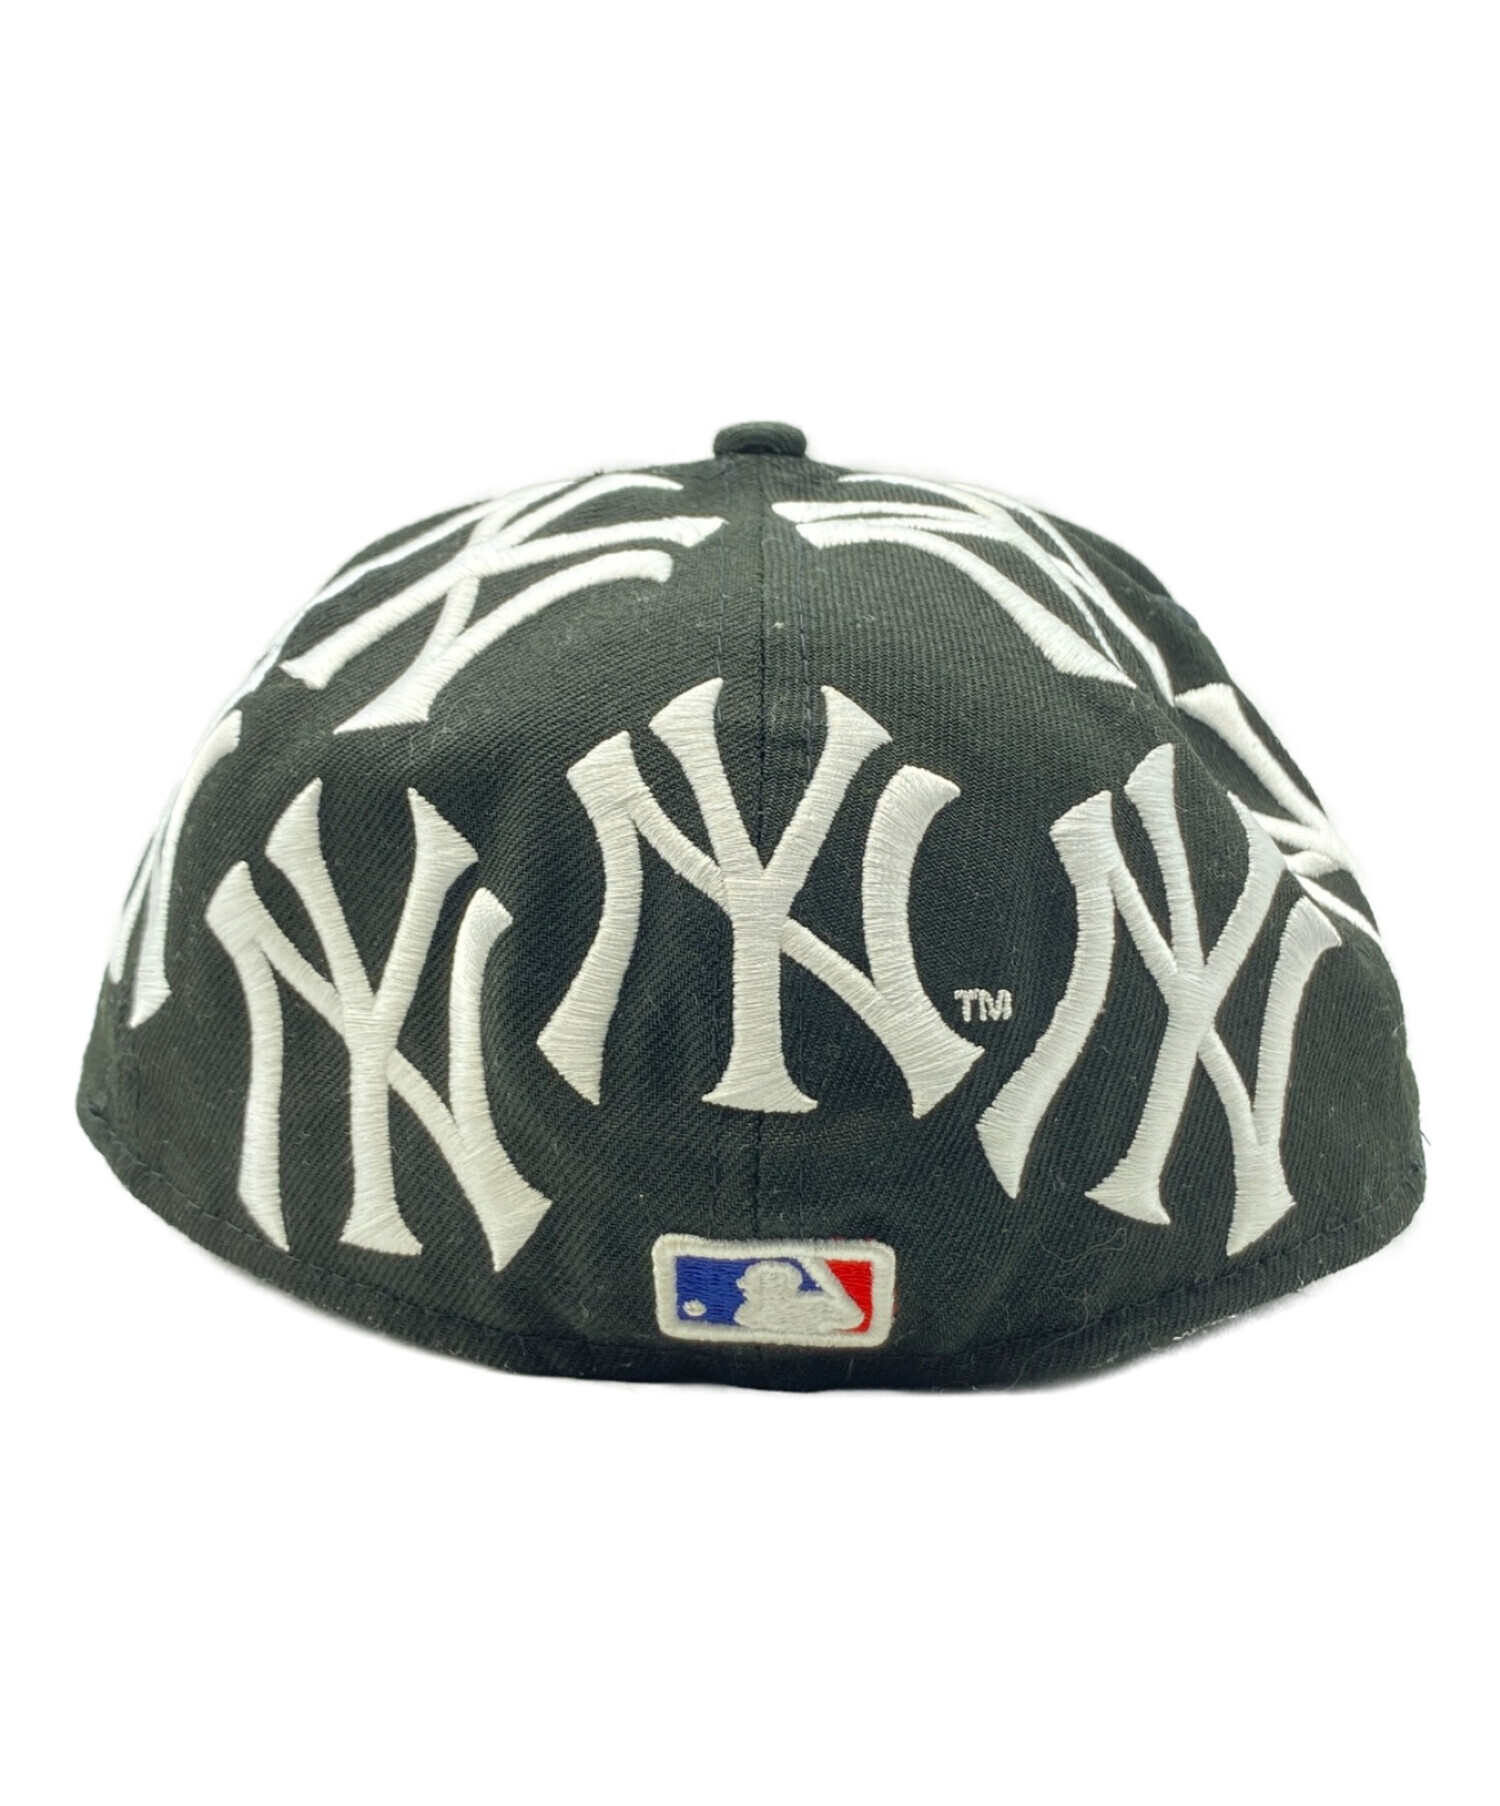 New Era (ニューエラ) SUPREME (シュプリーム) New York Yankees Box Logo New Era Cap ブラック  サイズ:7 1/4